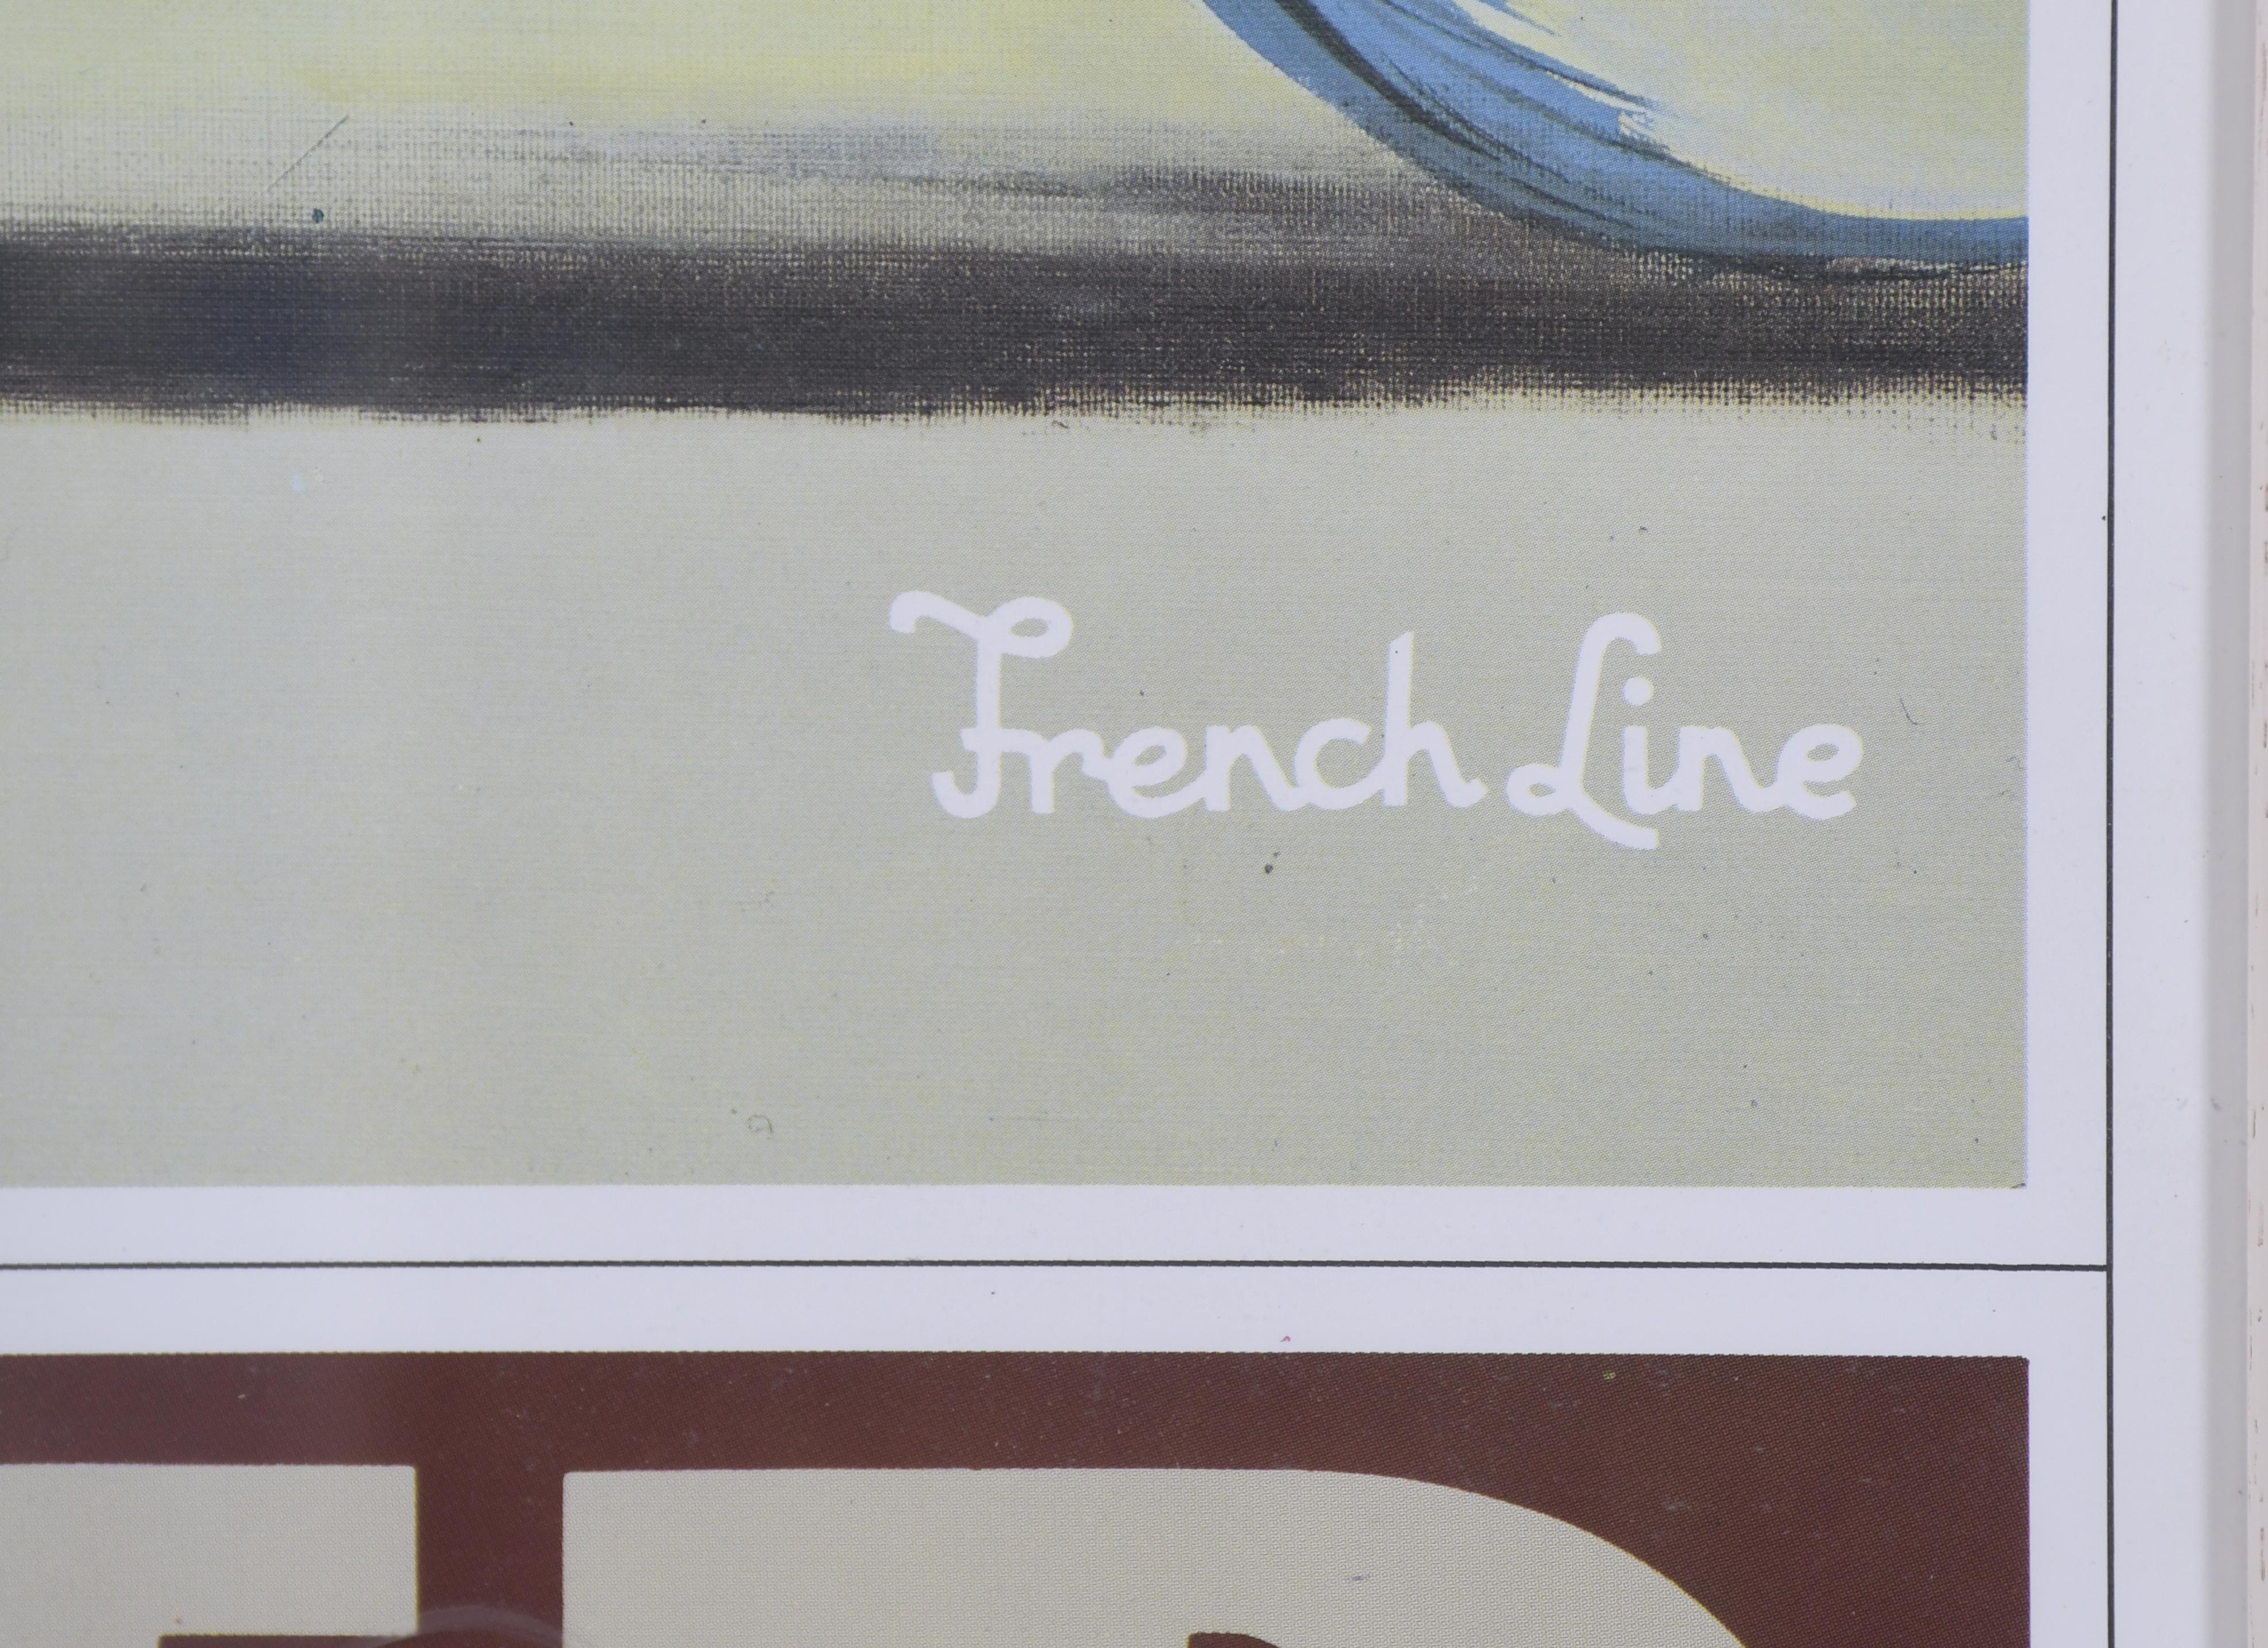 CIGANER (XX). "SAVED, BREMERHAVEN", French line, 1979.